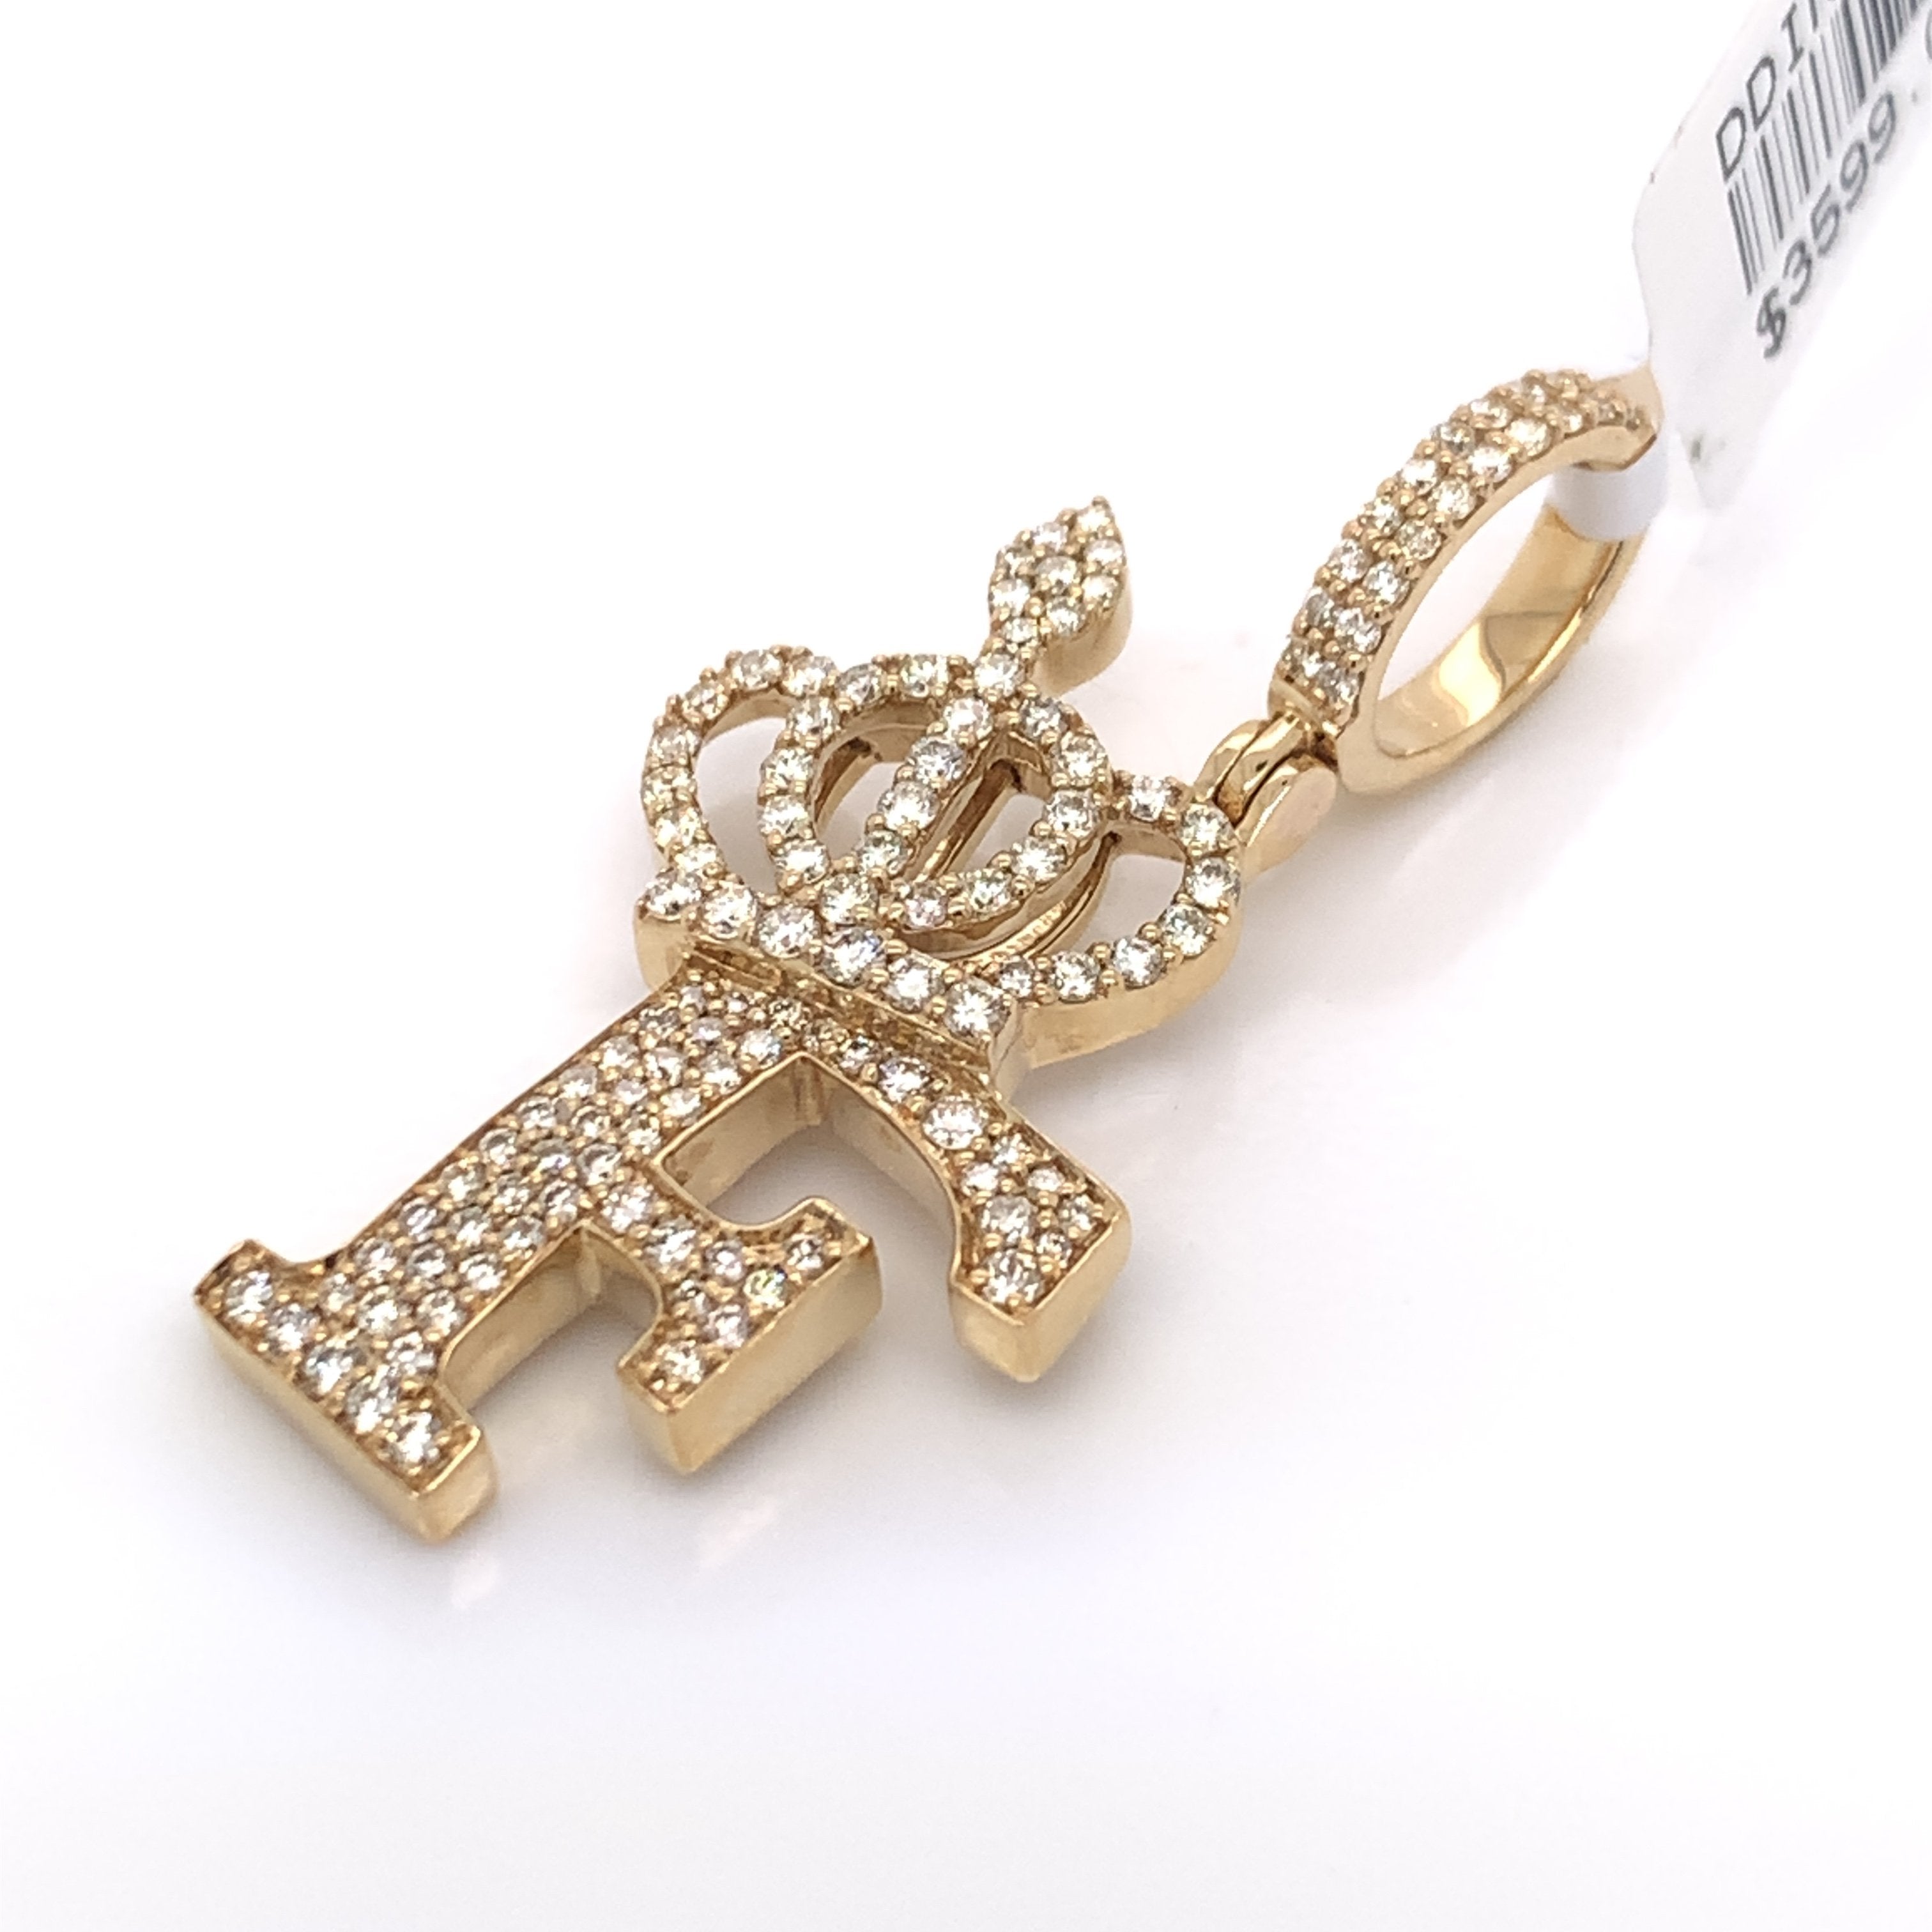 1.30 CT. Diamond Initial "F" Pendant in 10K Gold - White Carat Diamonds 